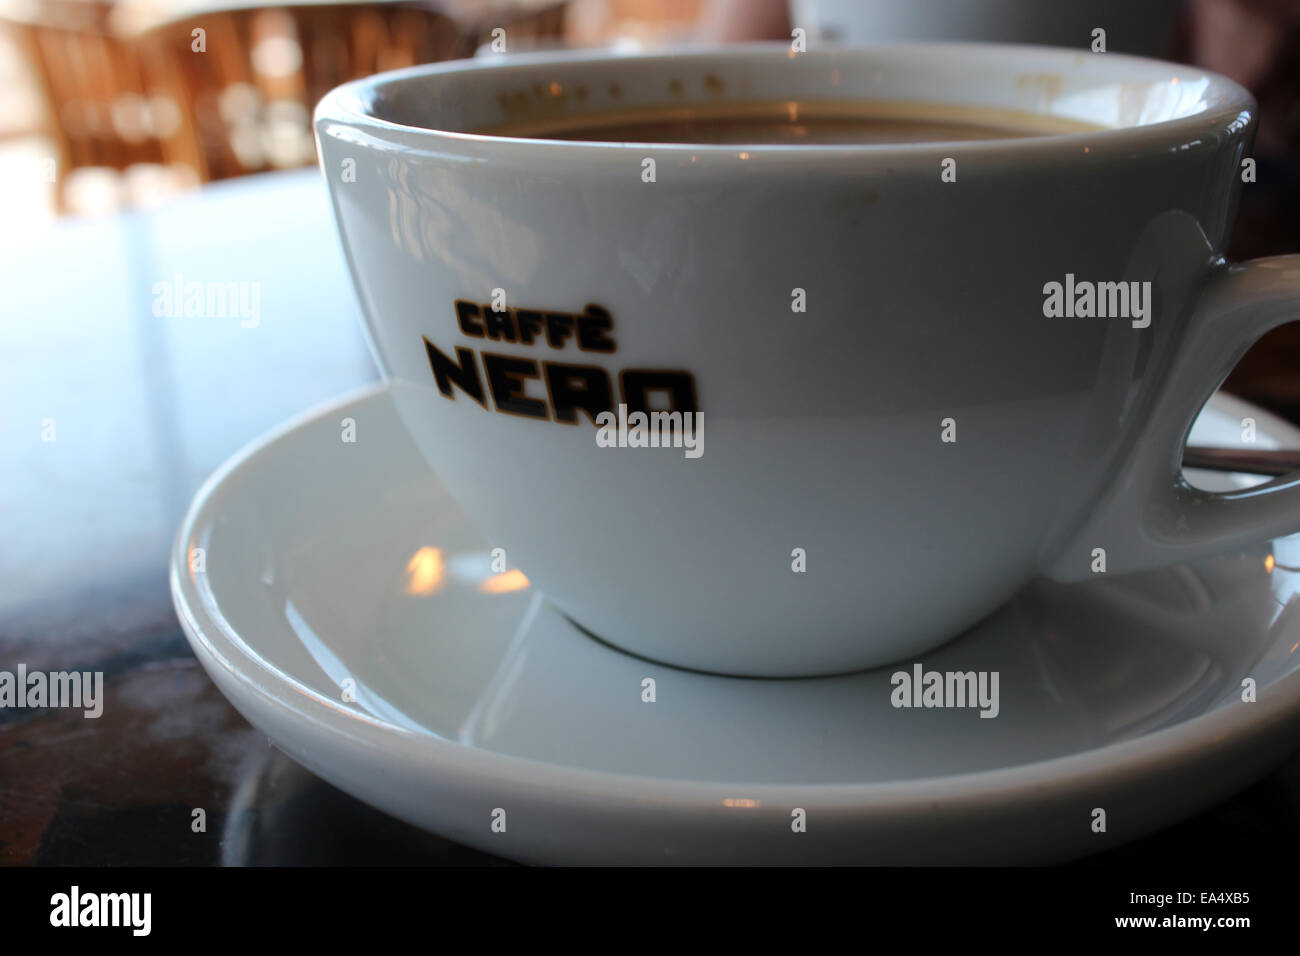 A Caffe Nero coffee made fresh Stock Photo